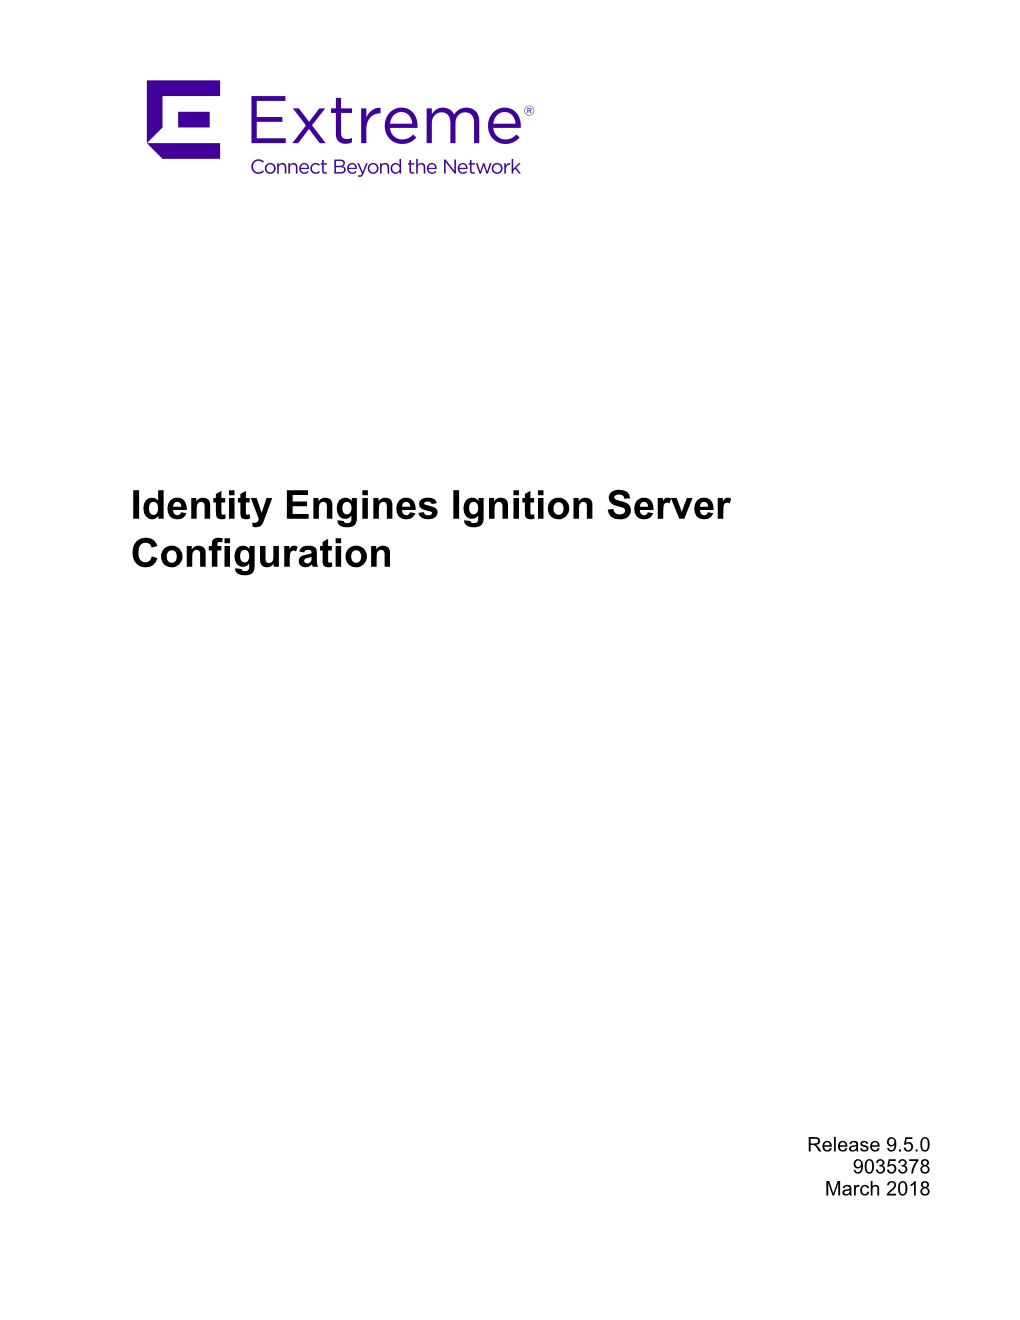 Identity Engines Ignition Server Configuration Rel 9.5.0